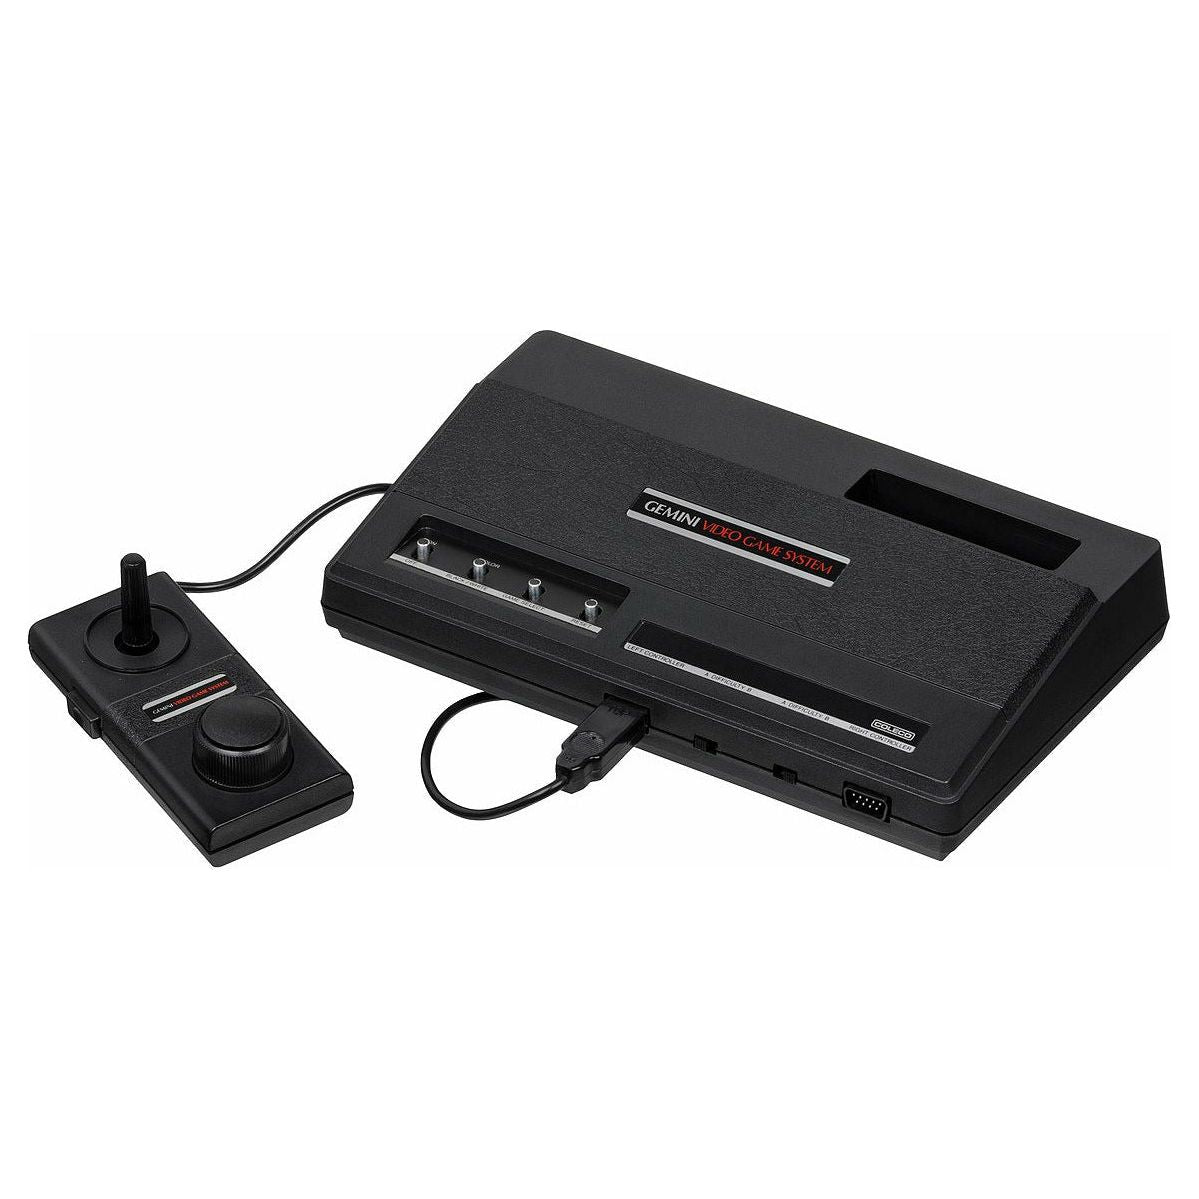 Coleco Gemini System (Atari 2600 Clone)